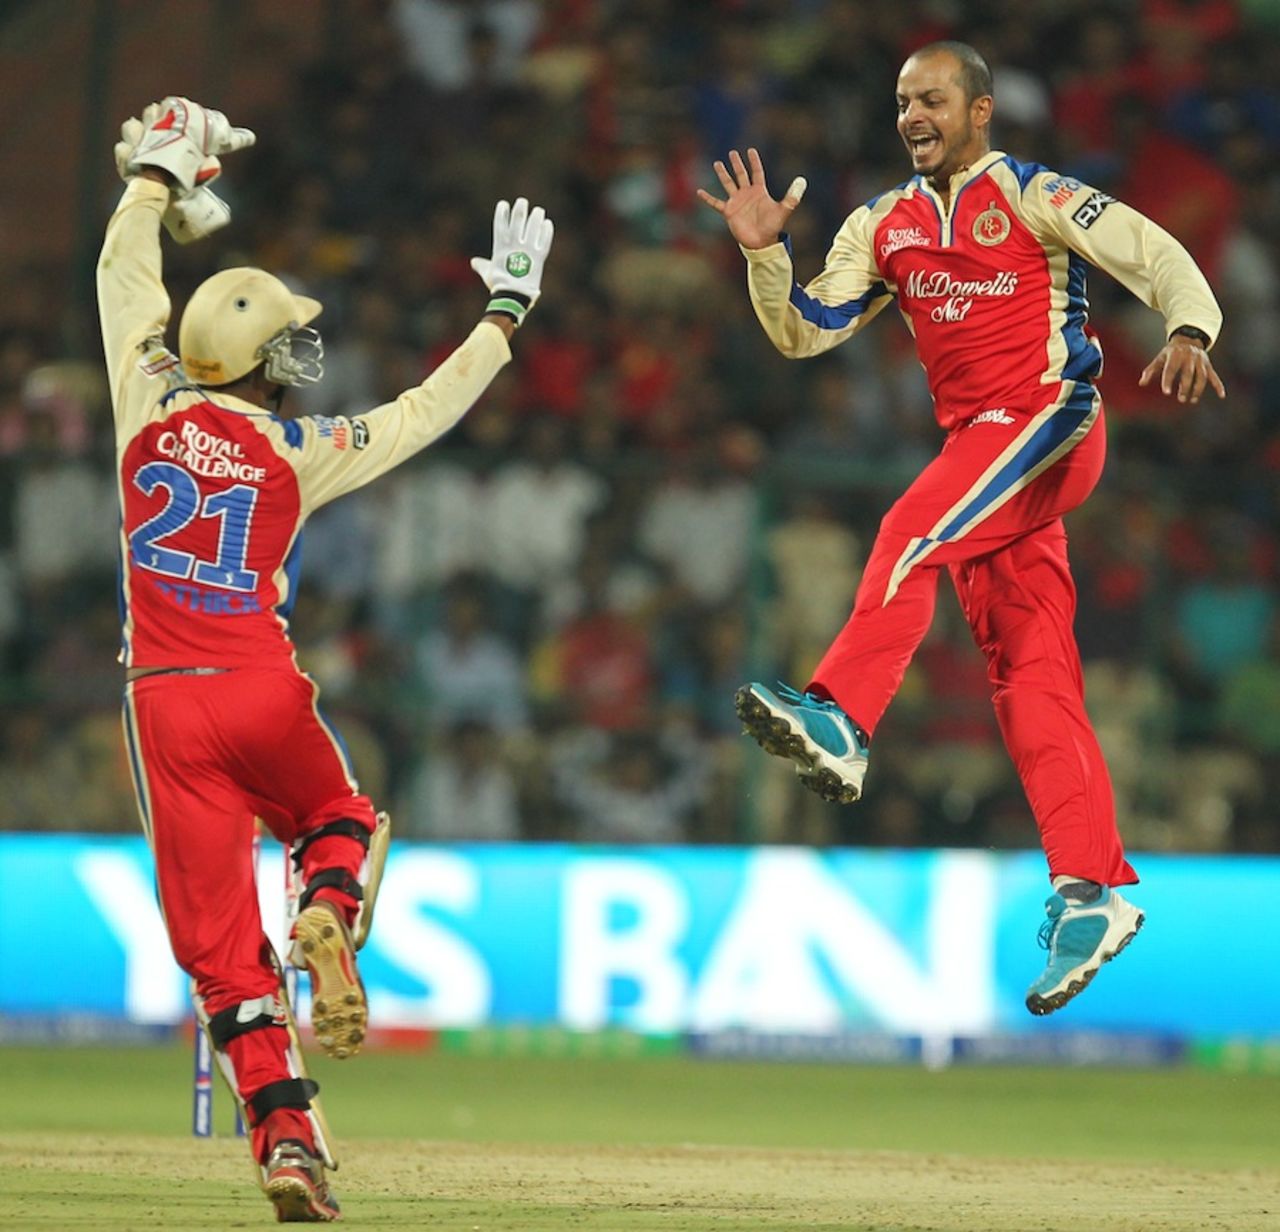 A jubilant Murali Kartik celebrates the wicket of Ricky Ponting, Royal Challengers Bangalore v Mumbai Indians, IPL, Bangalore, April 4, 2013